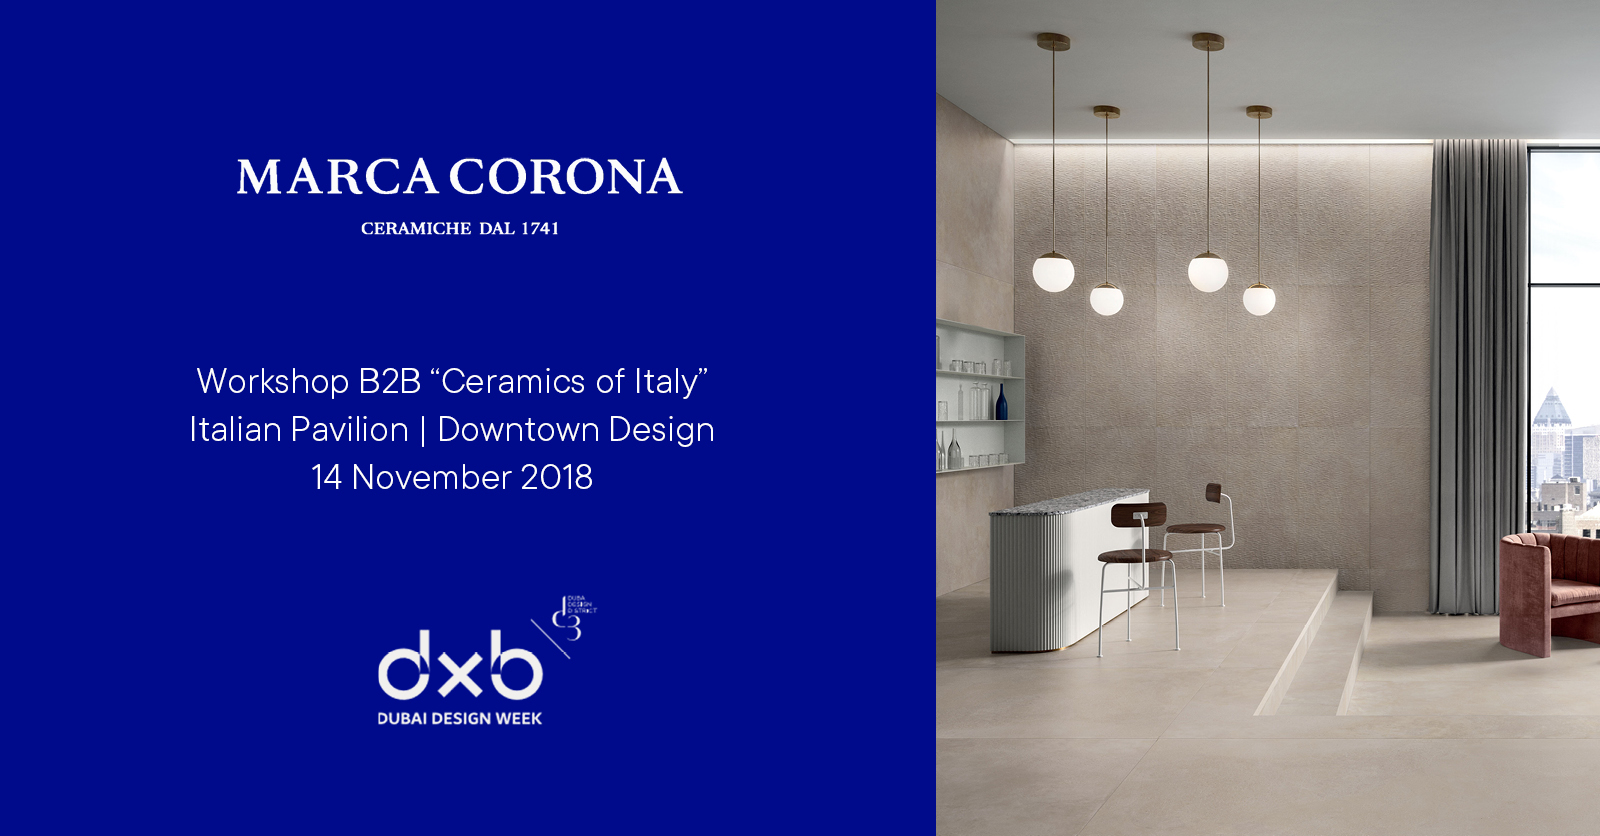 Marca Corona at Dubai Design Week 2018